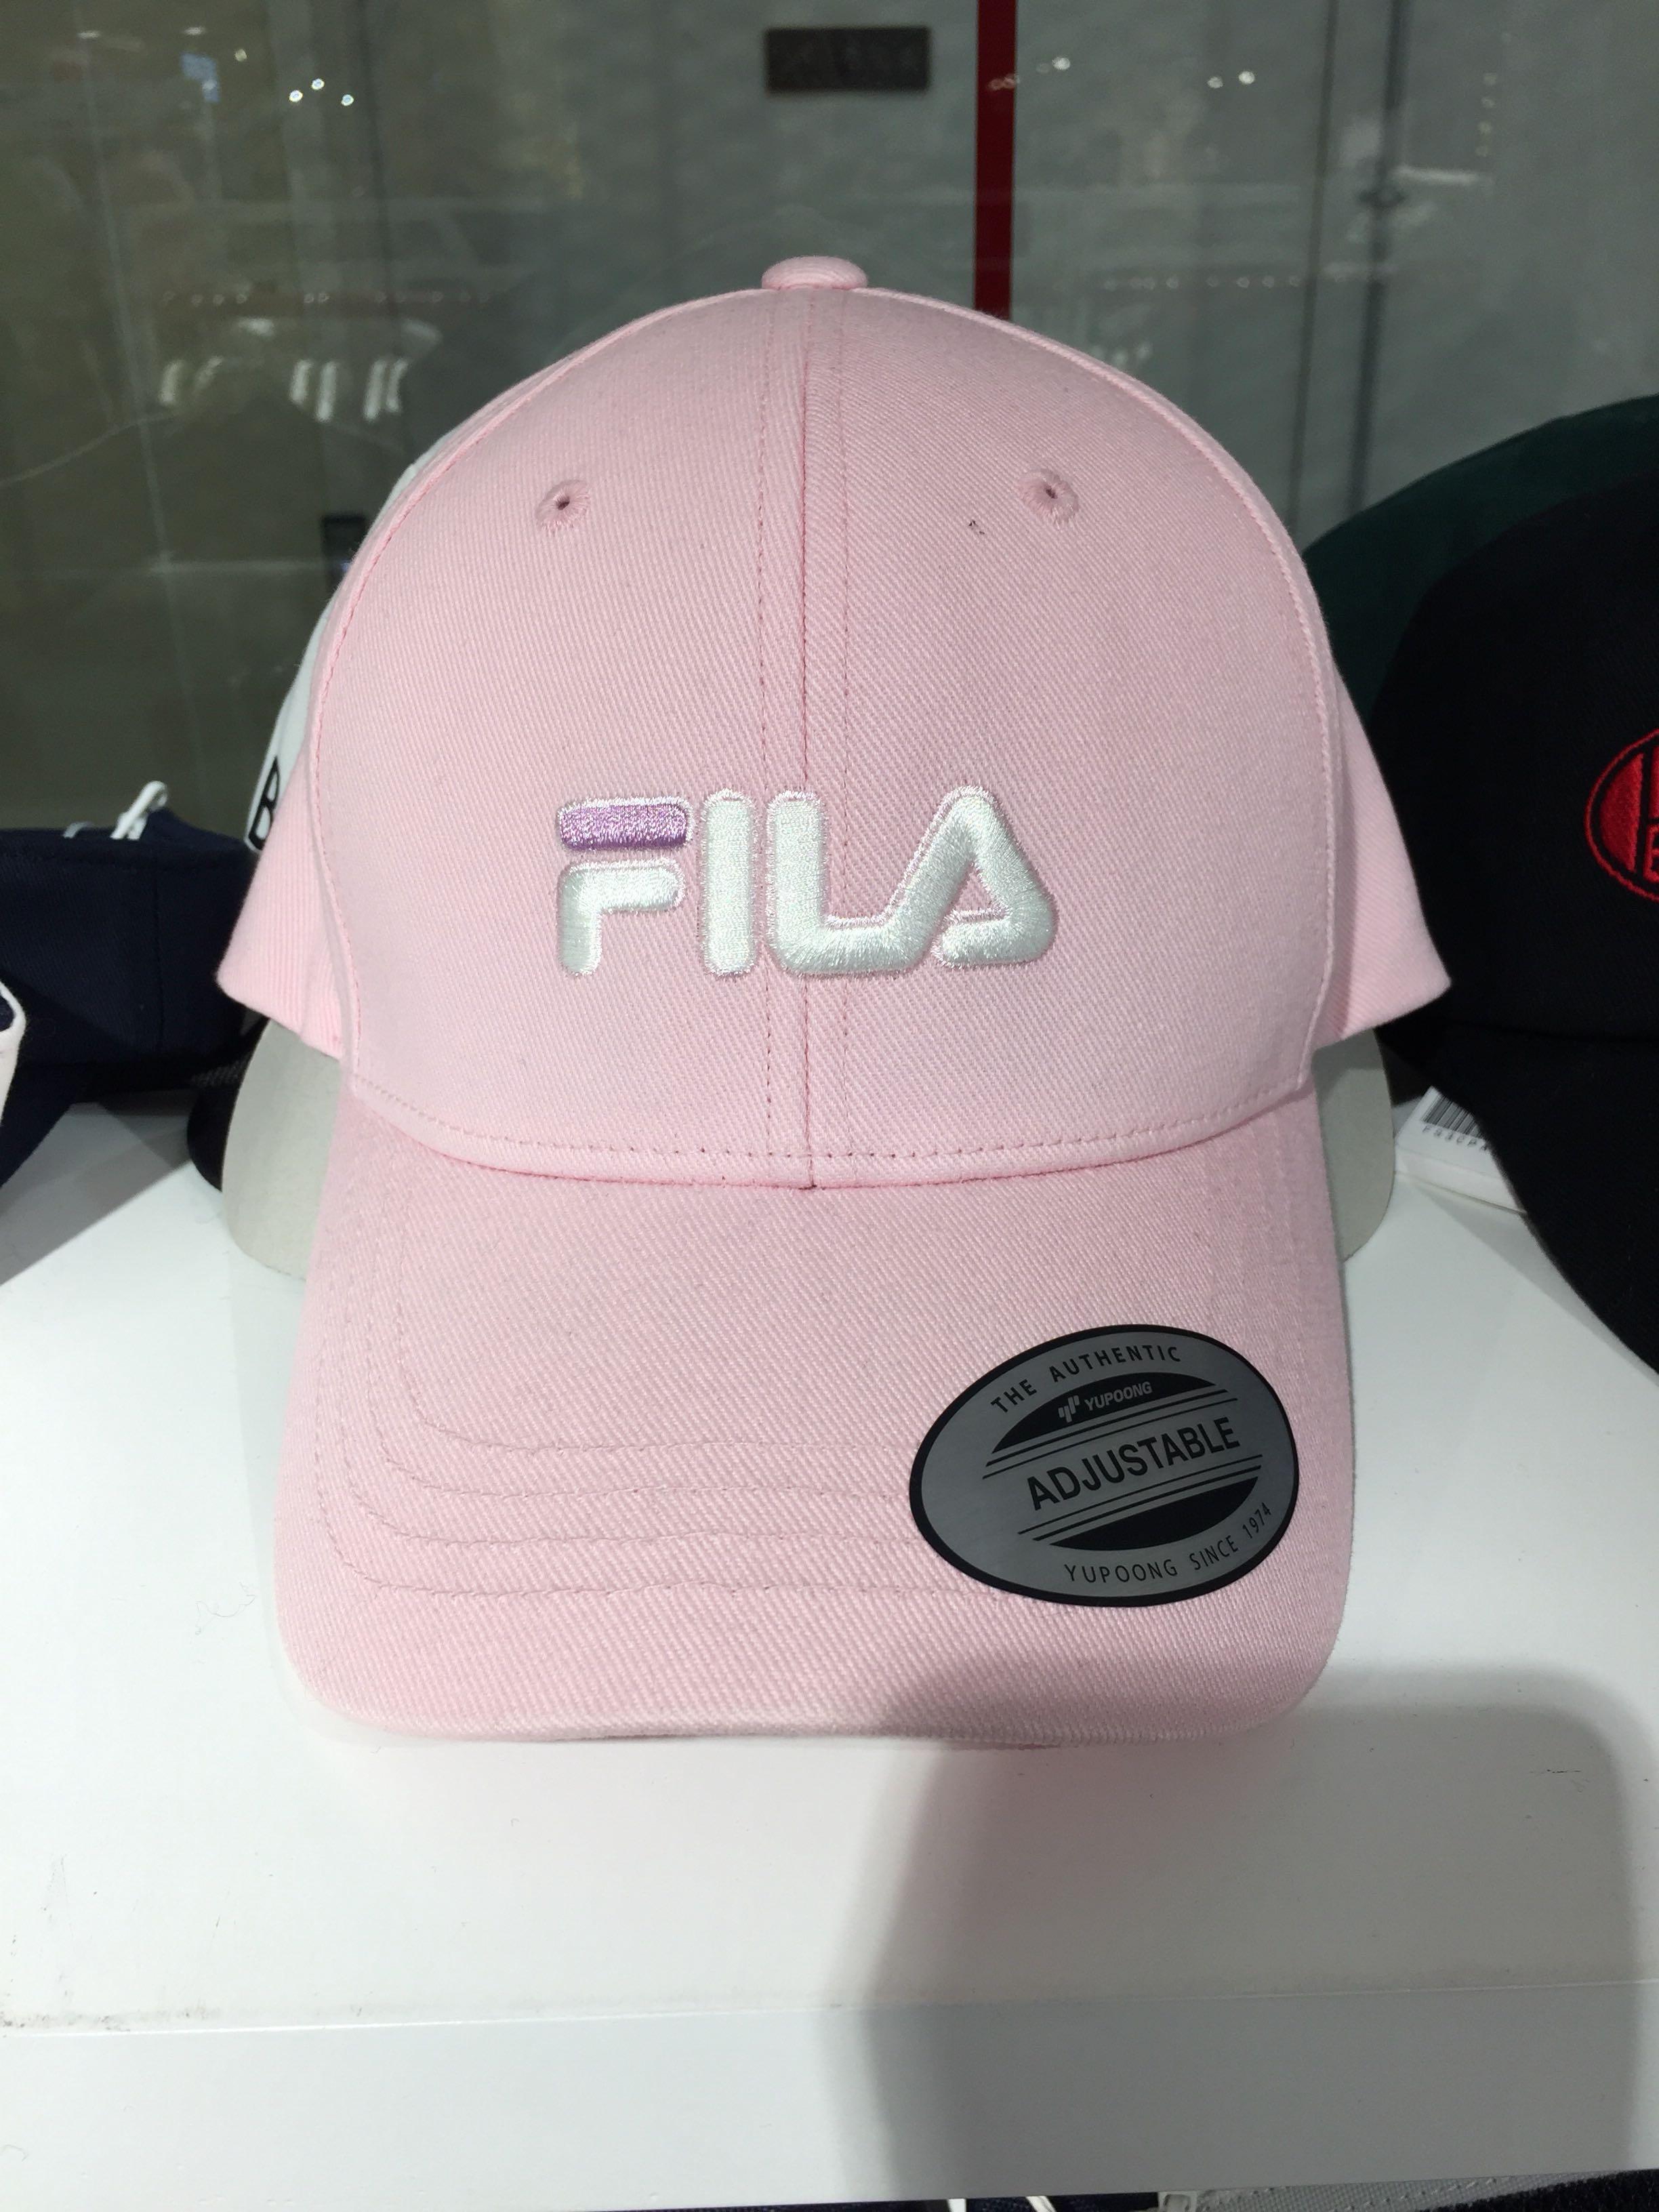 pink fila hat